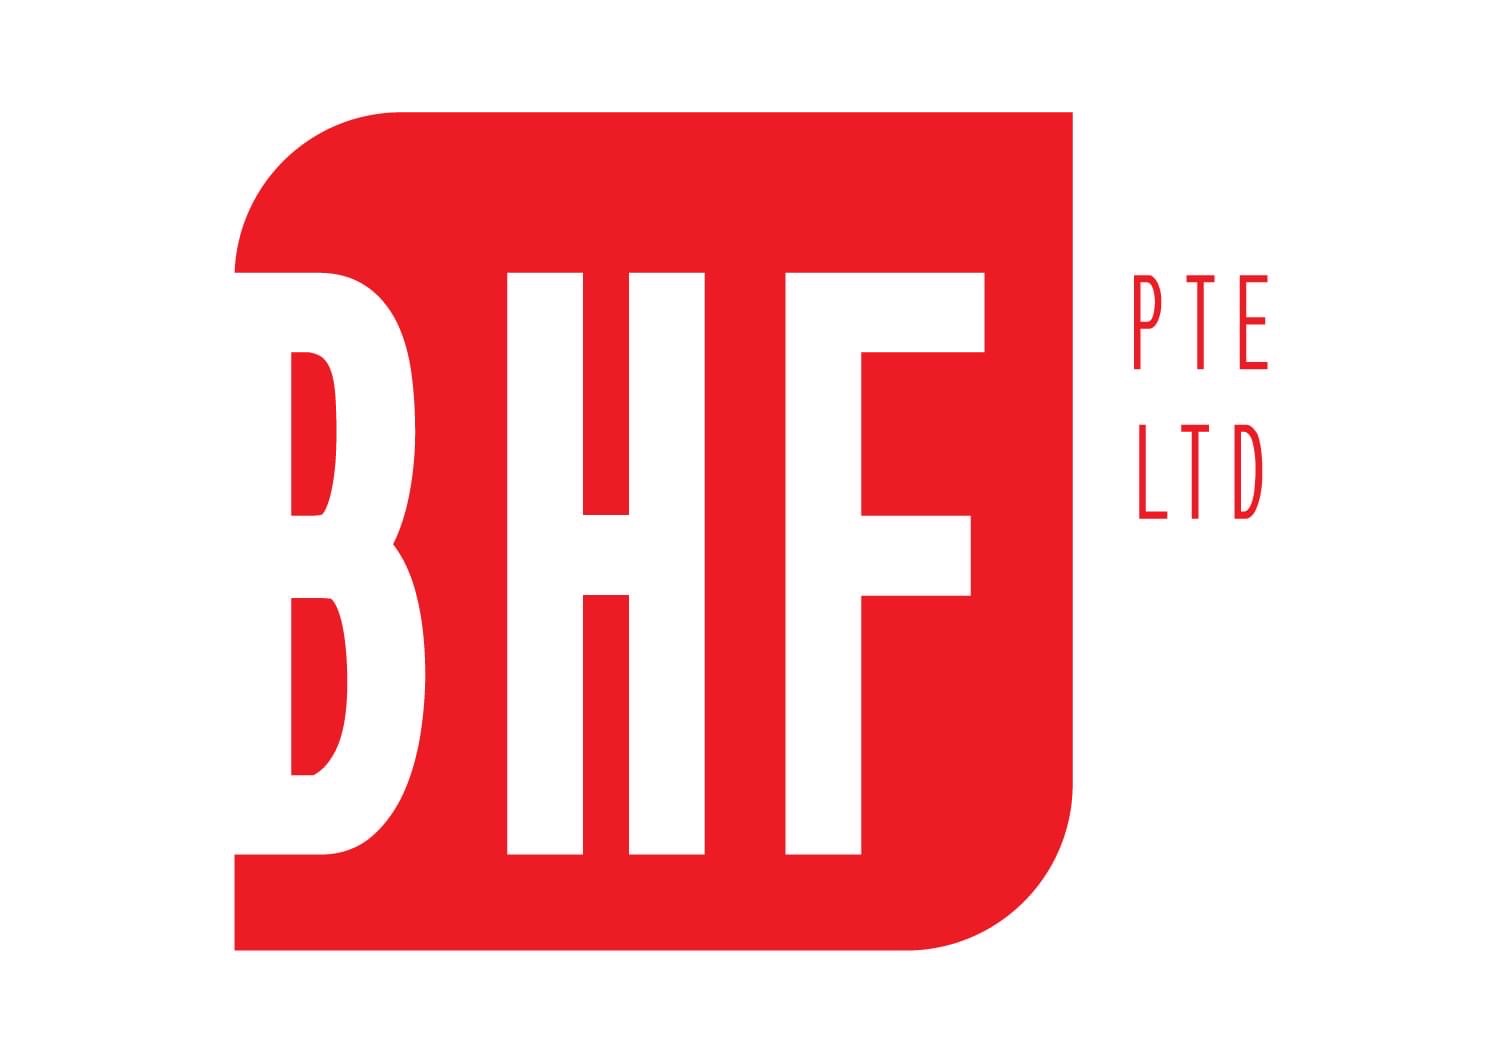 Bhf Pte. Ltd. logo